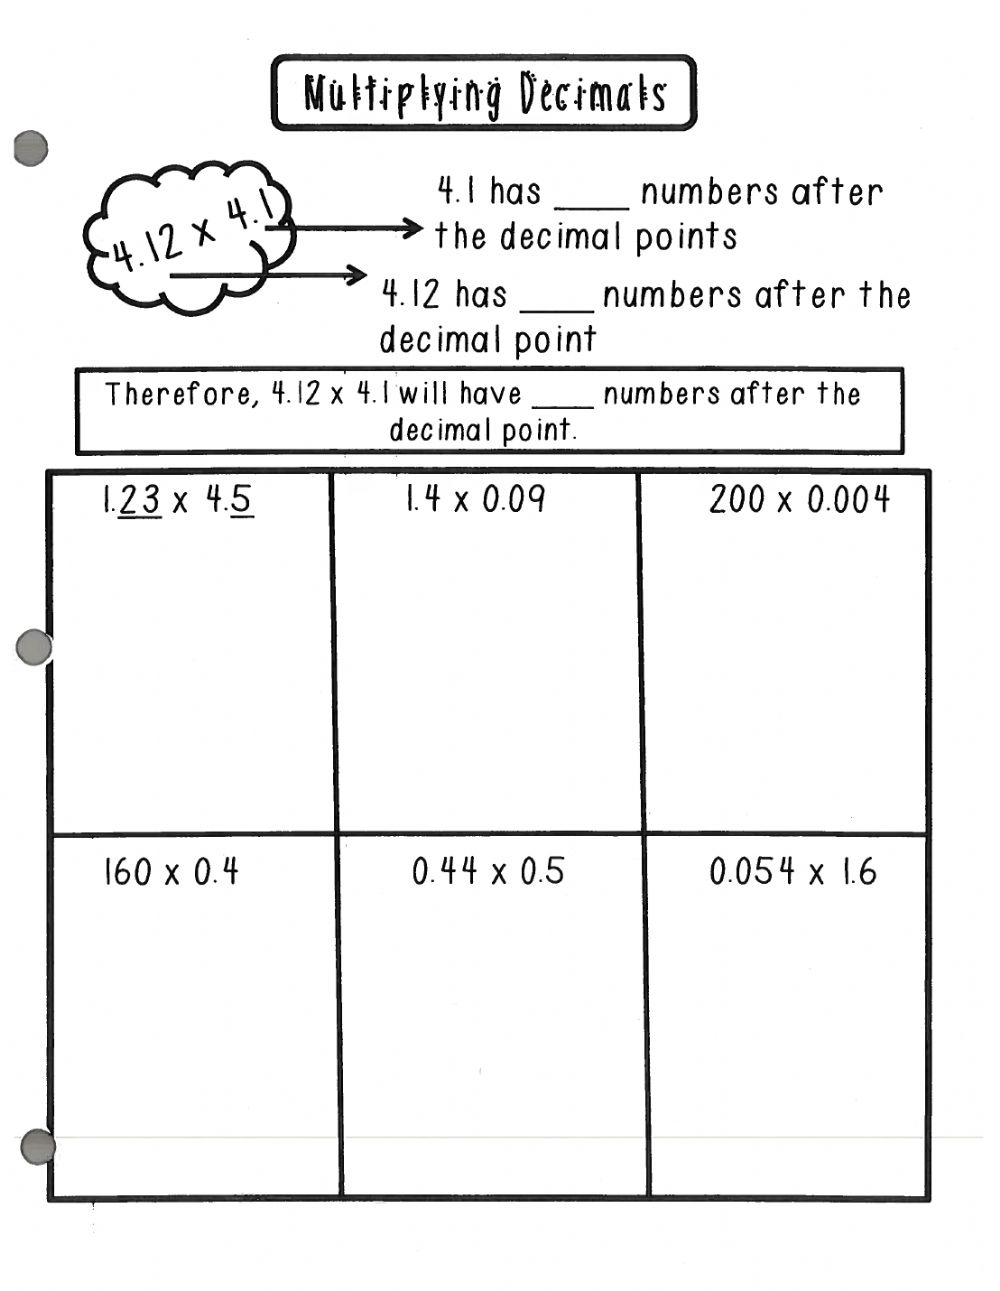 Multiplying Decimals Notes Worksheet